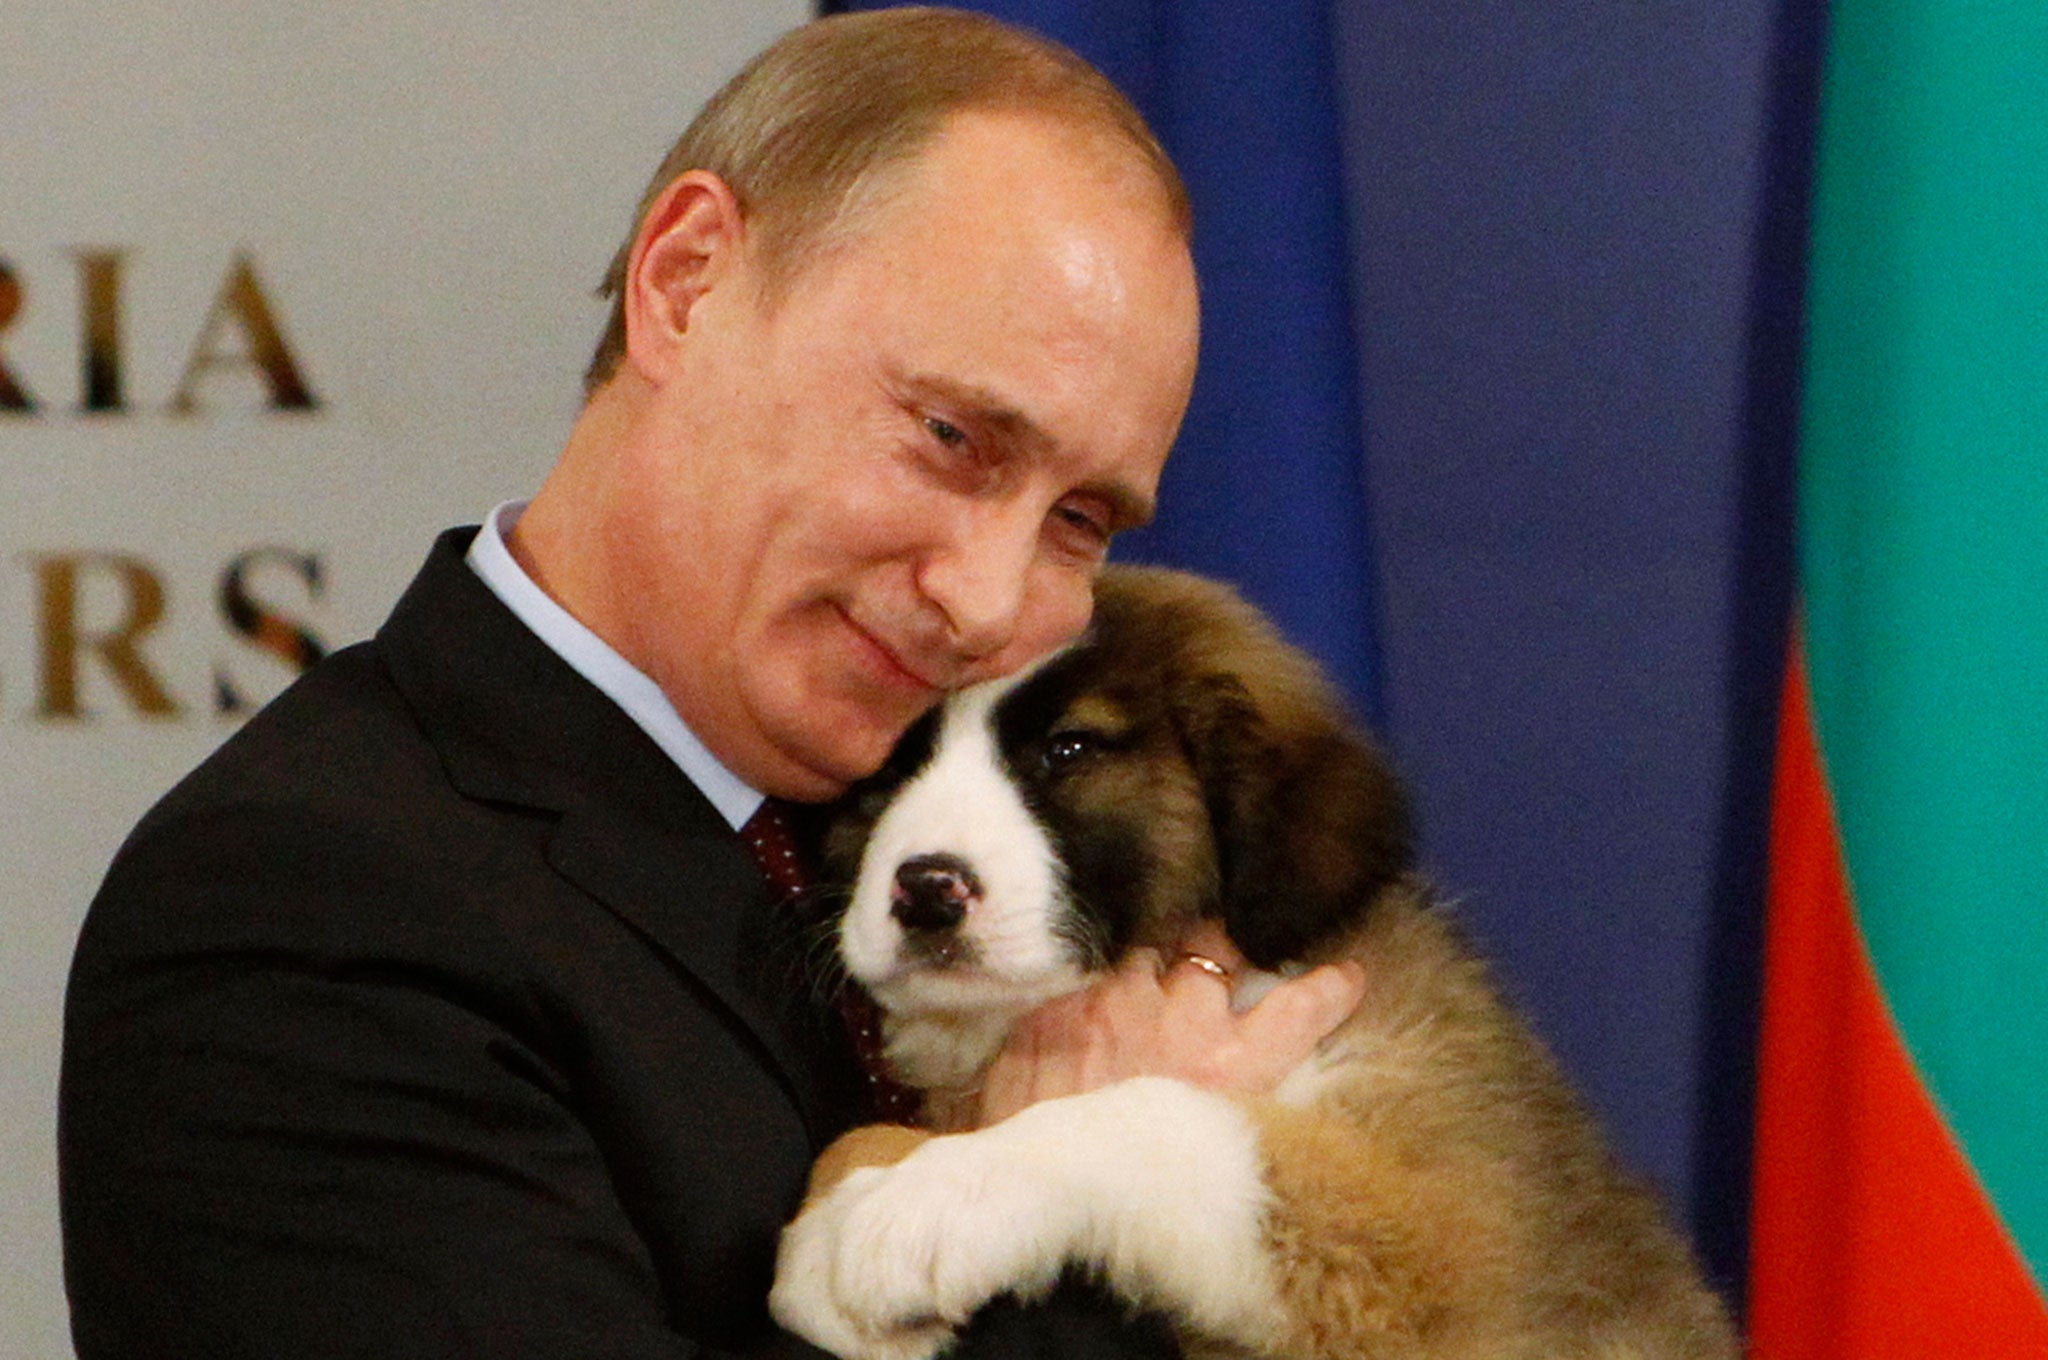 Vladimir Putin hugs a Bulgarian shepherd dog, after receiving it as a present from Bulgaria's Prime Minister Boiko Borisov